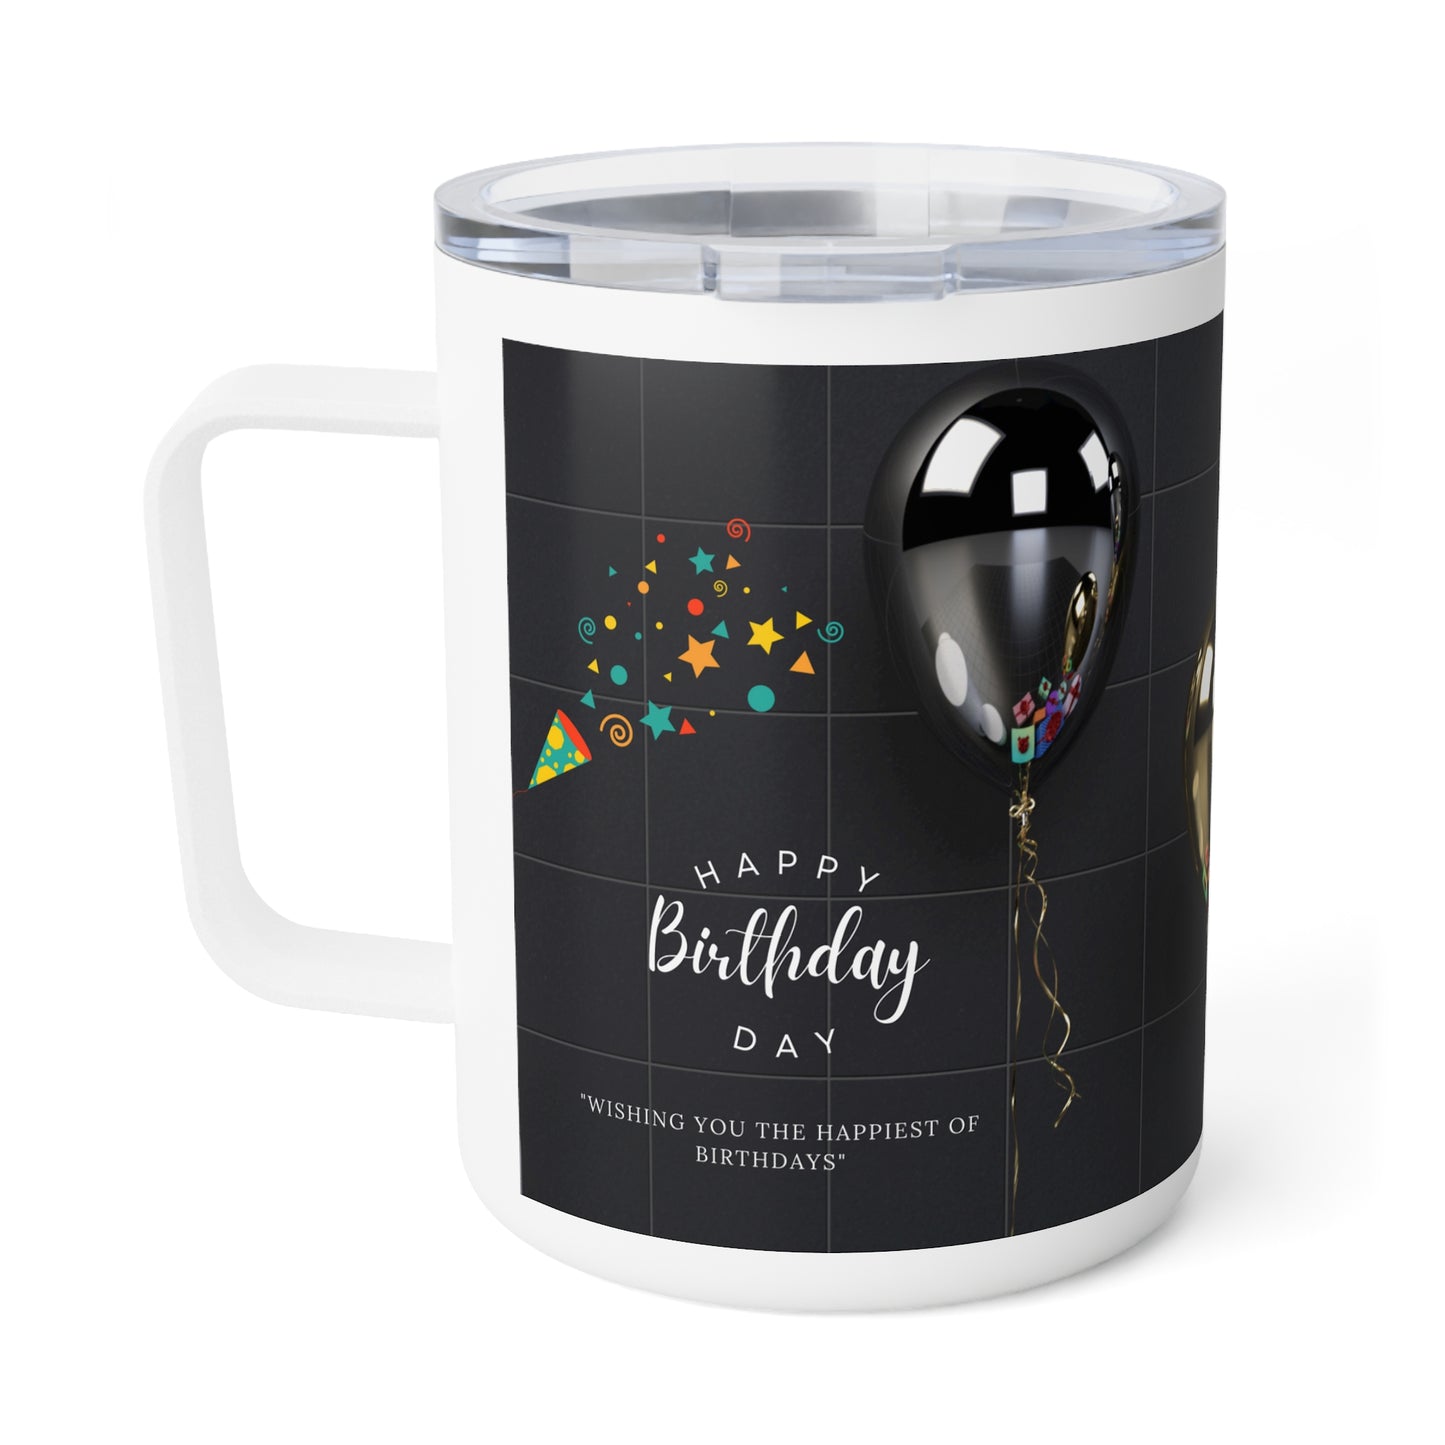 Happy Birthday Insulated Travel Mug, 10 oz, Black